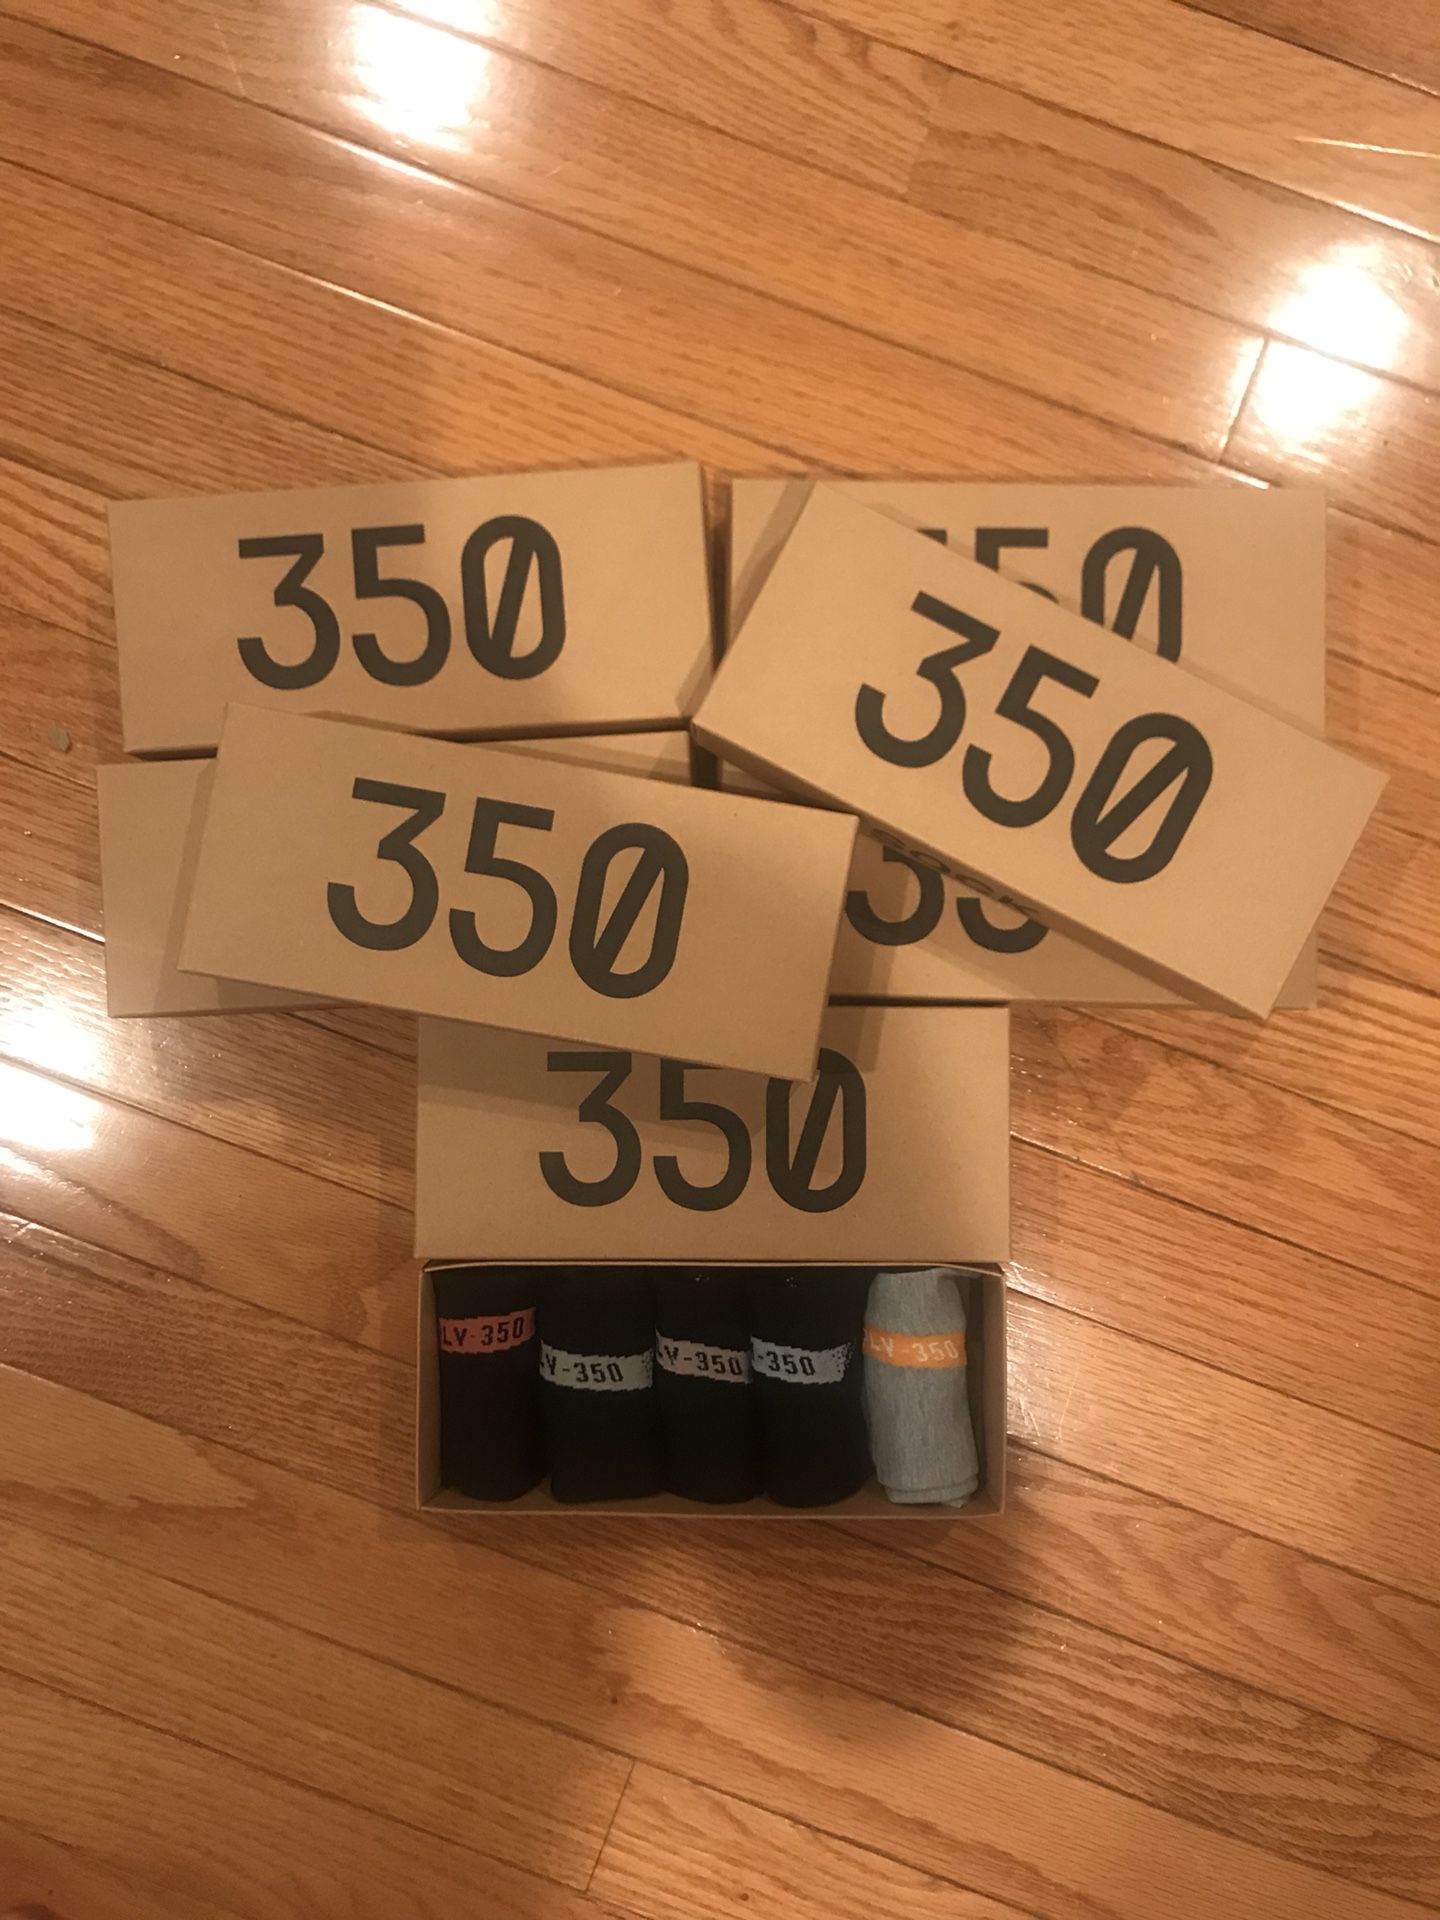 yeezy 350 sock 2 box